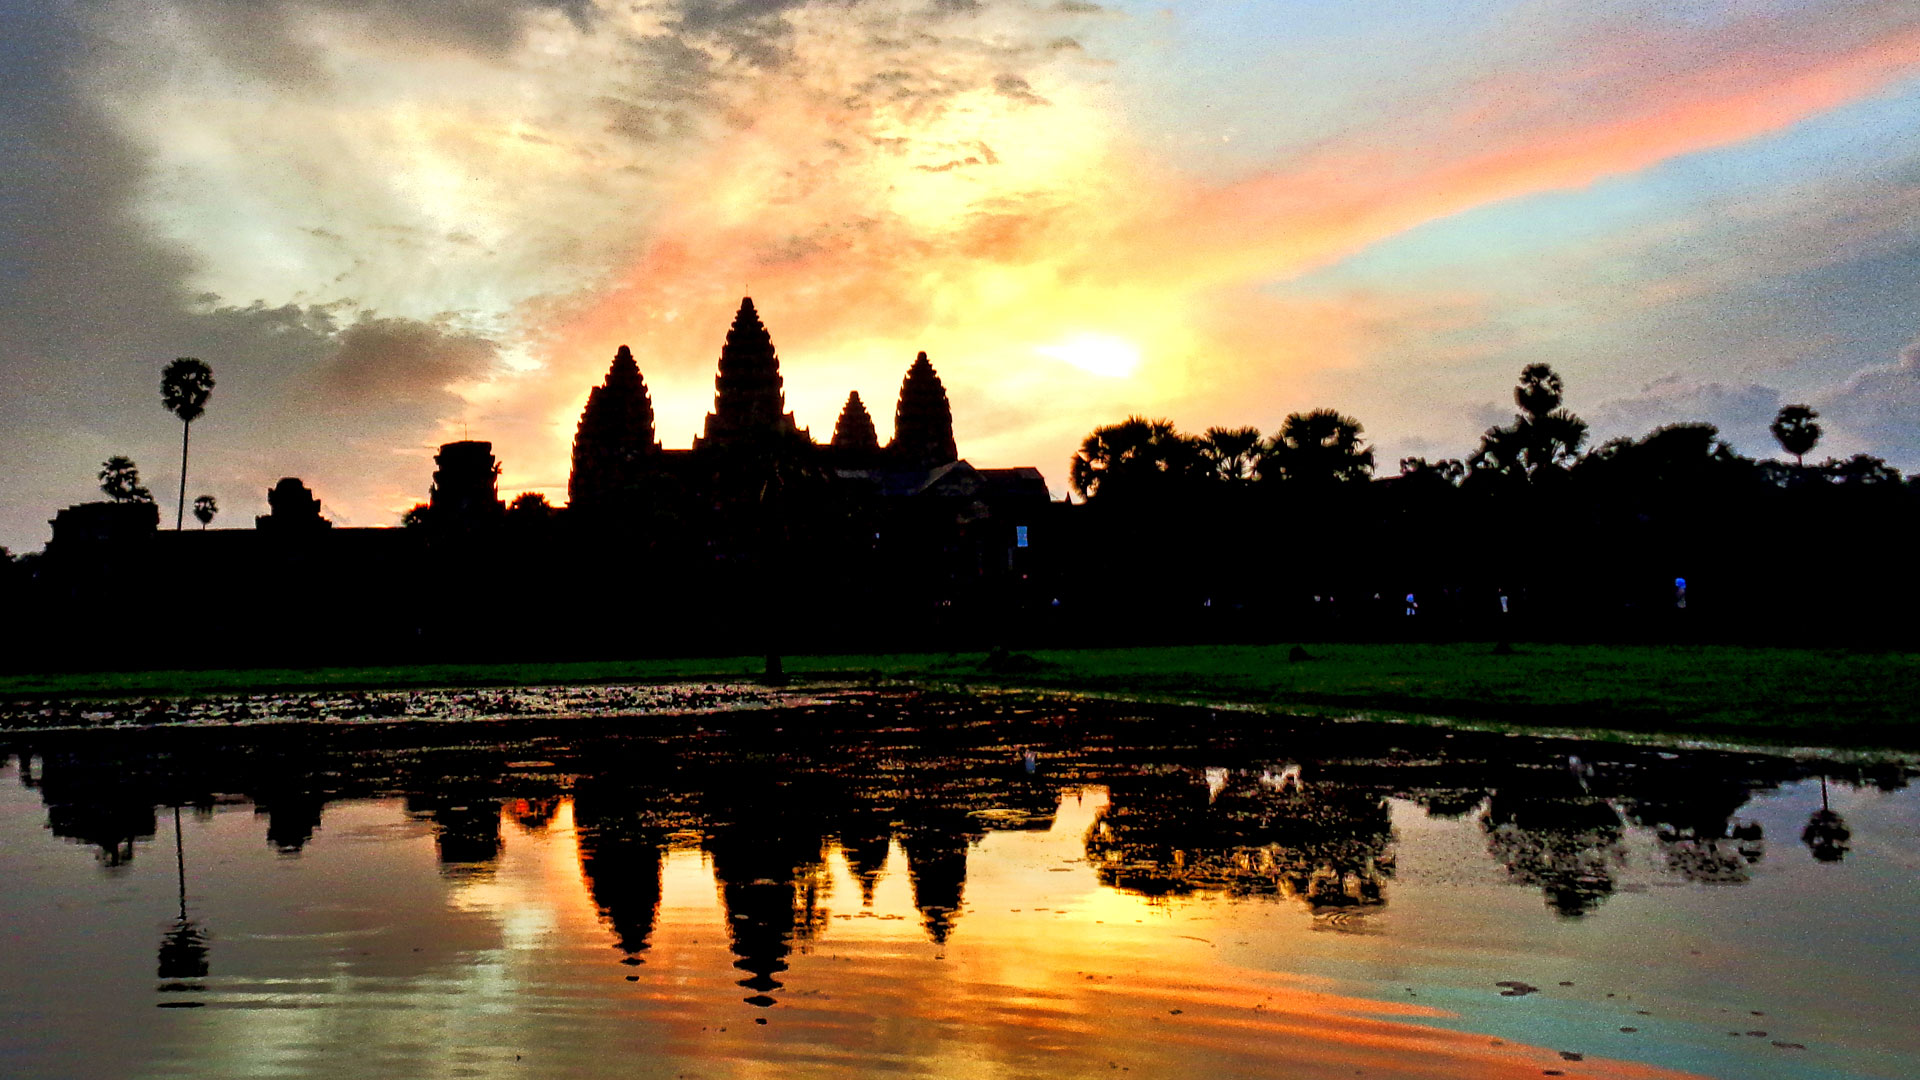 Sunrise over Angkor Wat temple